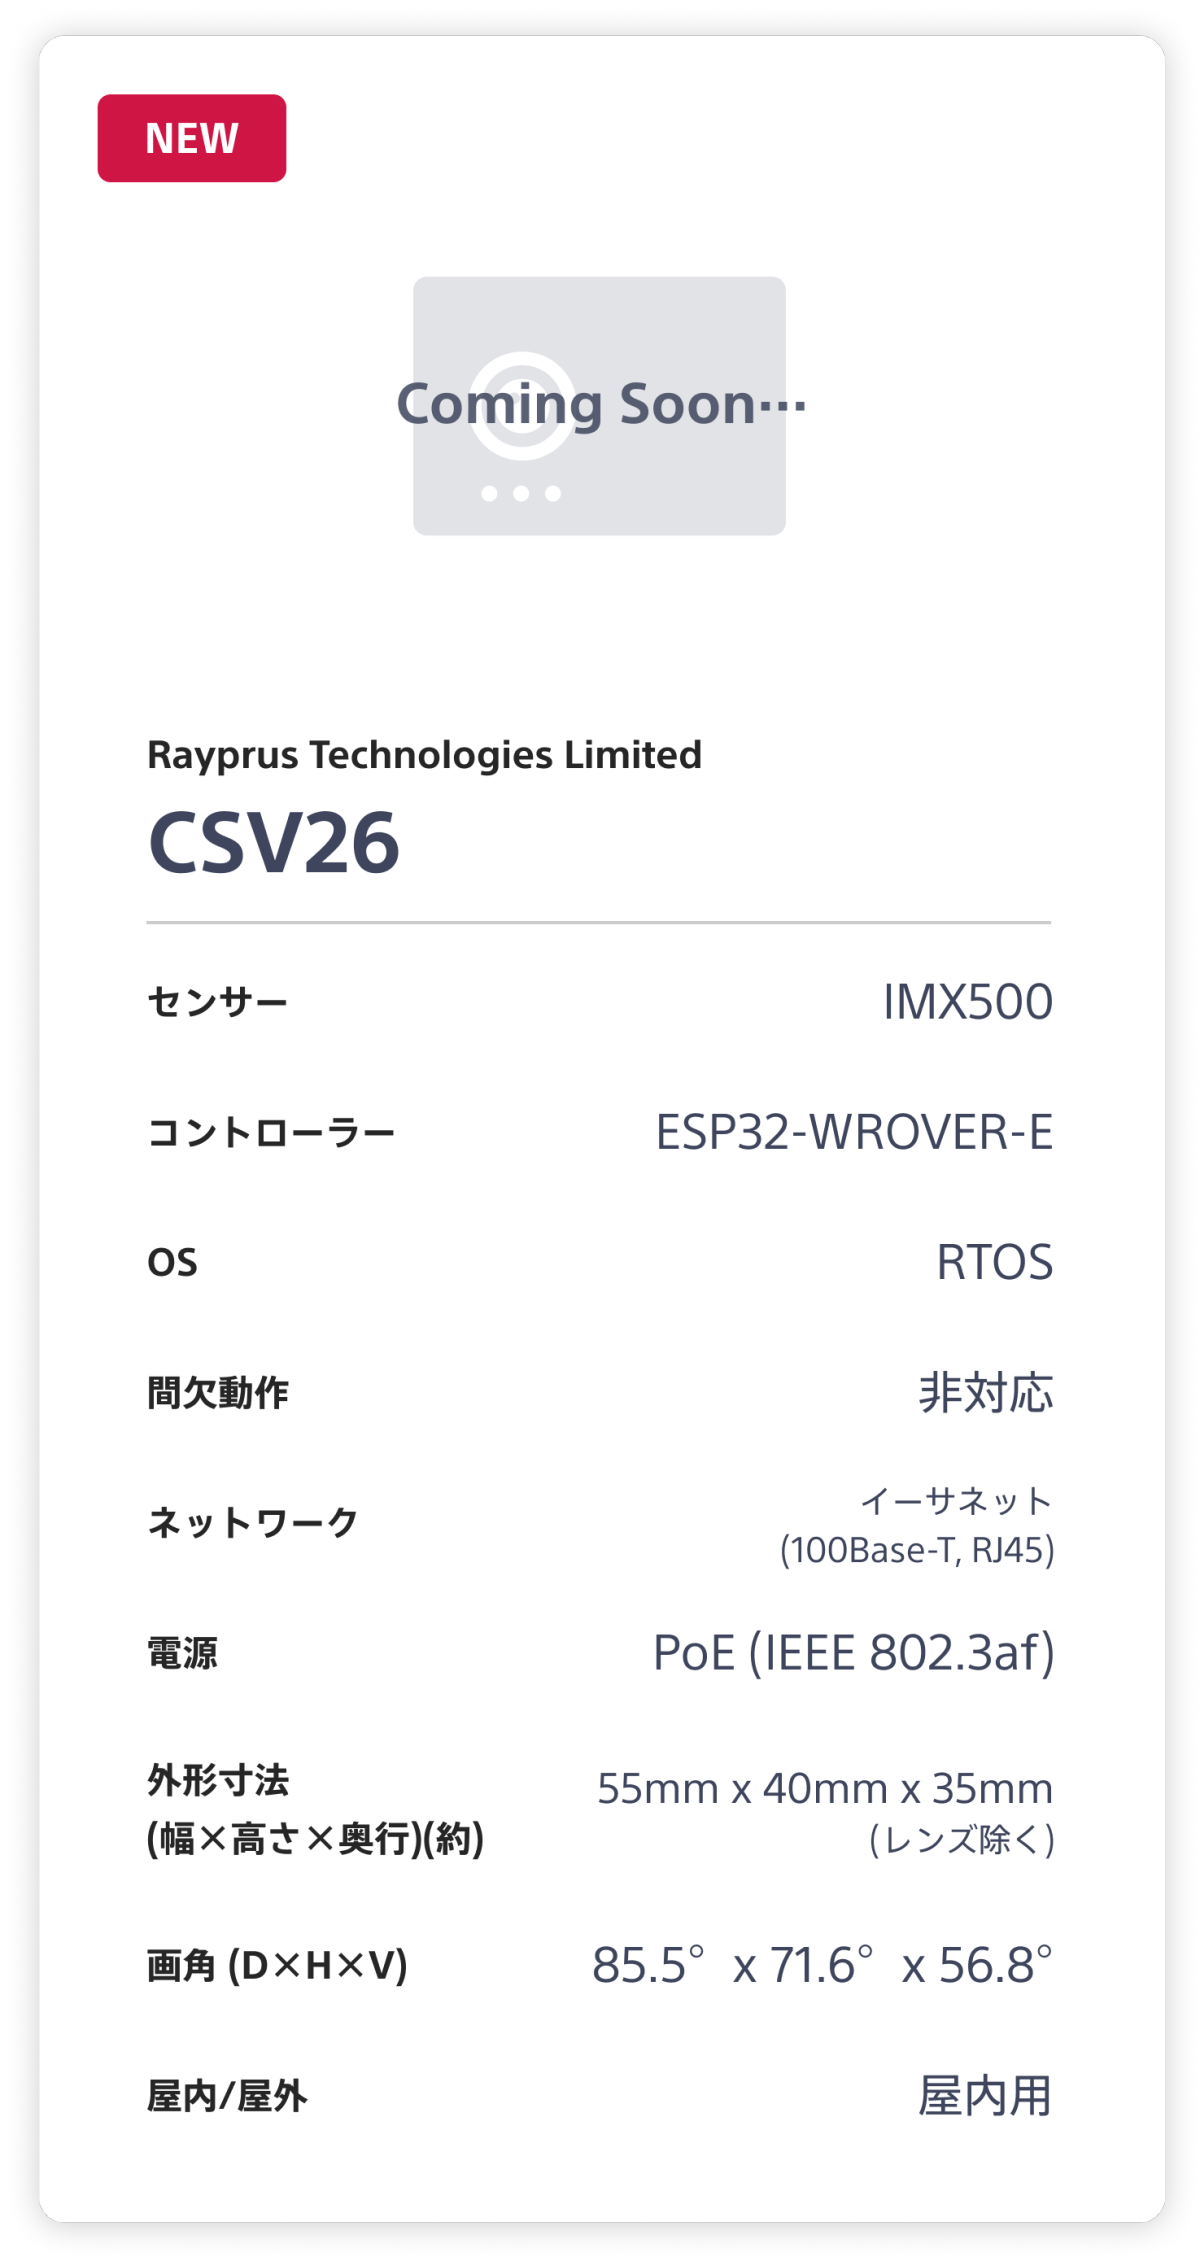 Rayprus Technologies Limited CSV26。センサー：IMX500。 コントローラー：ESP32-WROVER-E。 OS：RTOS。 間欠動作：非対応。 ネットワーク：イーサネット(100Base-T, RJ45)。 電源：PoE (1EEE 802.3af)。 外形寸法(幅×高さ×奥行)(約)：55mm x 40mm x 35mm (レンズ除く)。 画角 (D×H×V)：85.5°x 71.6°x 56.8°。 屋内/屋外：屋内用。